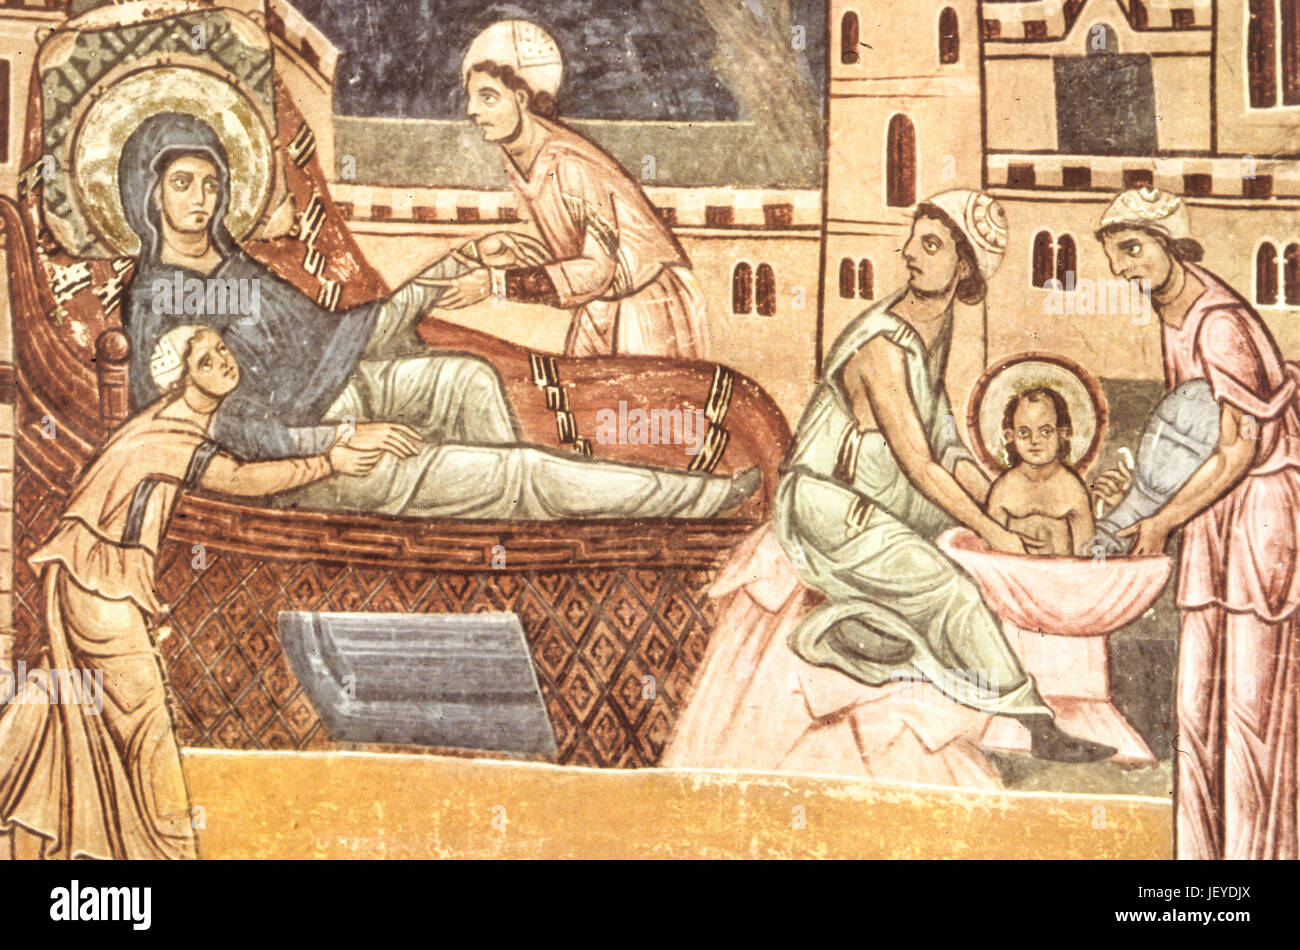 Birth of St. John the Baptist, life of St. John the Baptist, 13th century, baptistery, parma Stock Photo